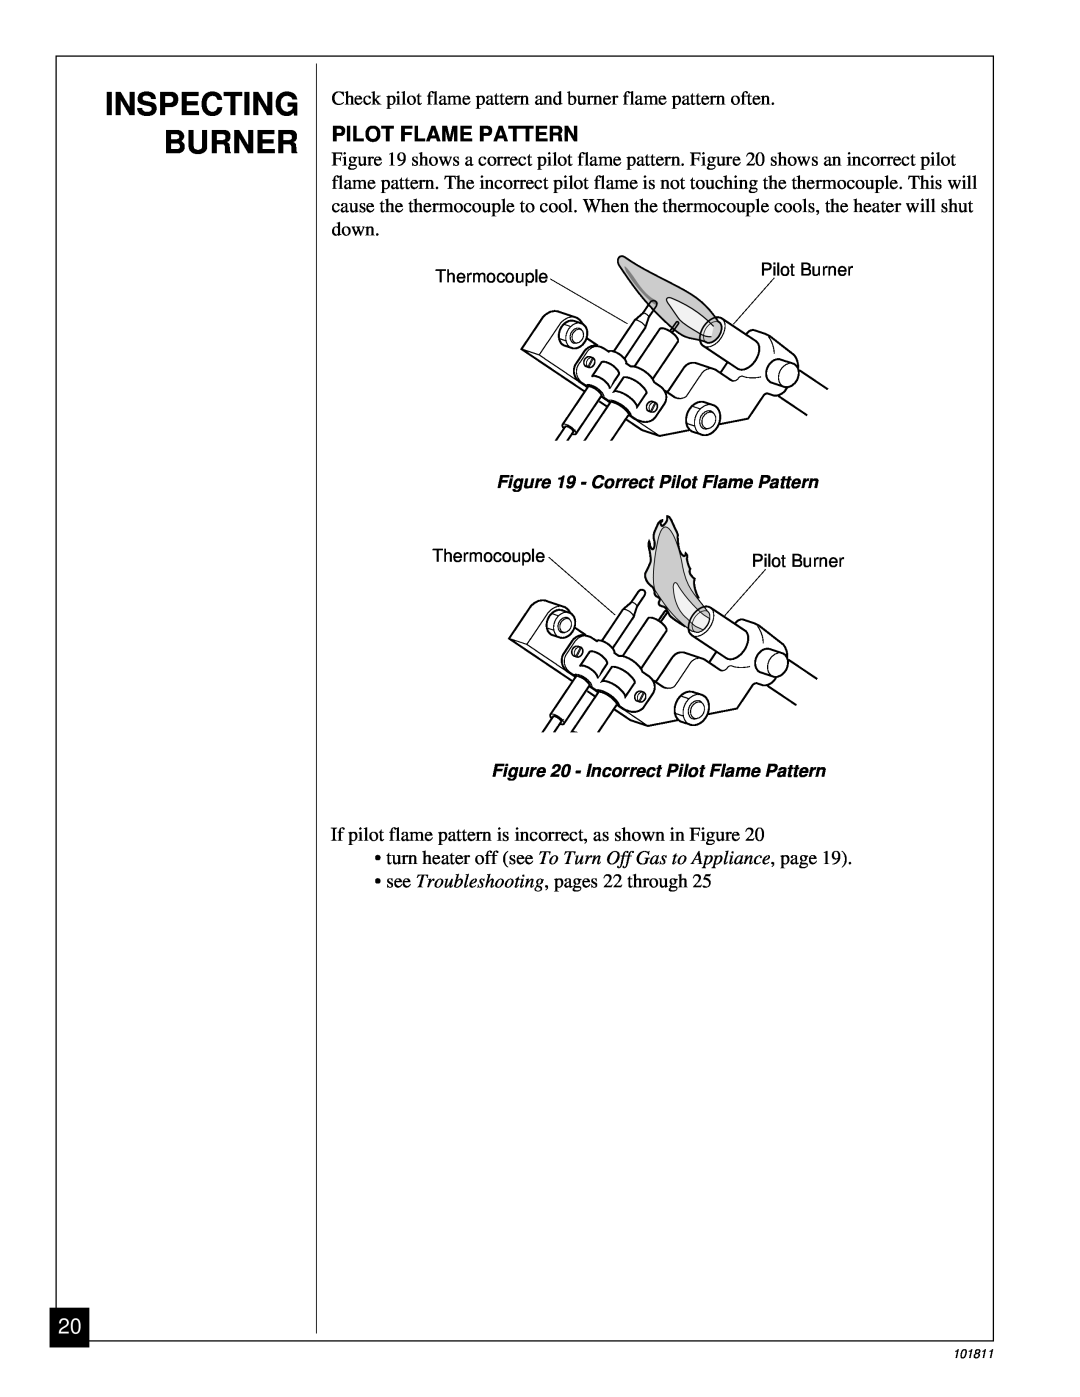 Desa 101811-01C.pdf installation manual Inspecting Burner, Pilot Flame Pattern 